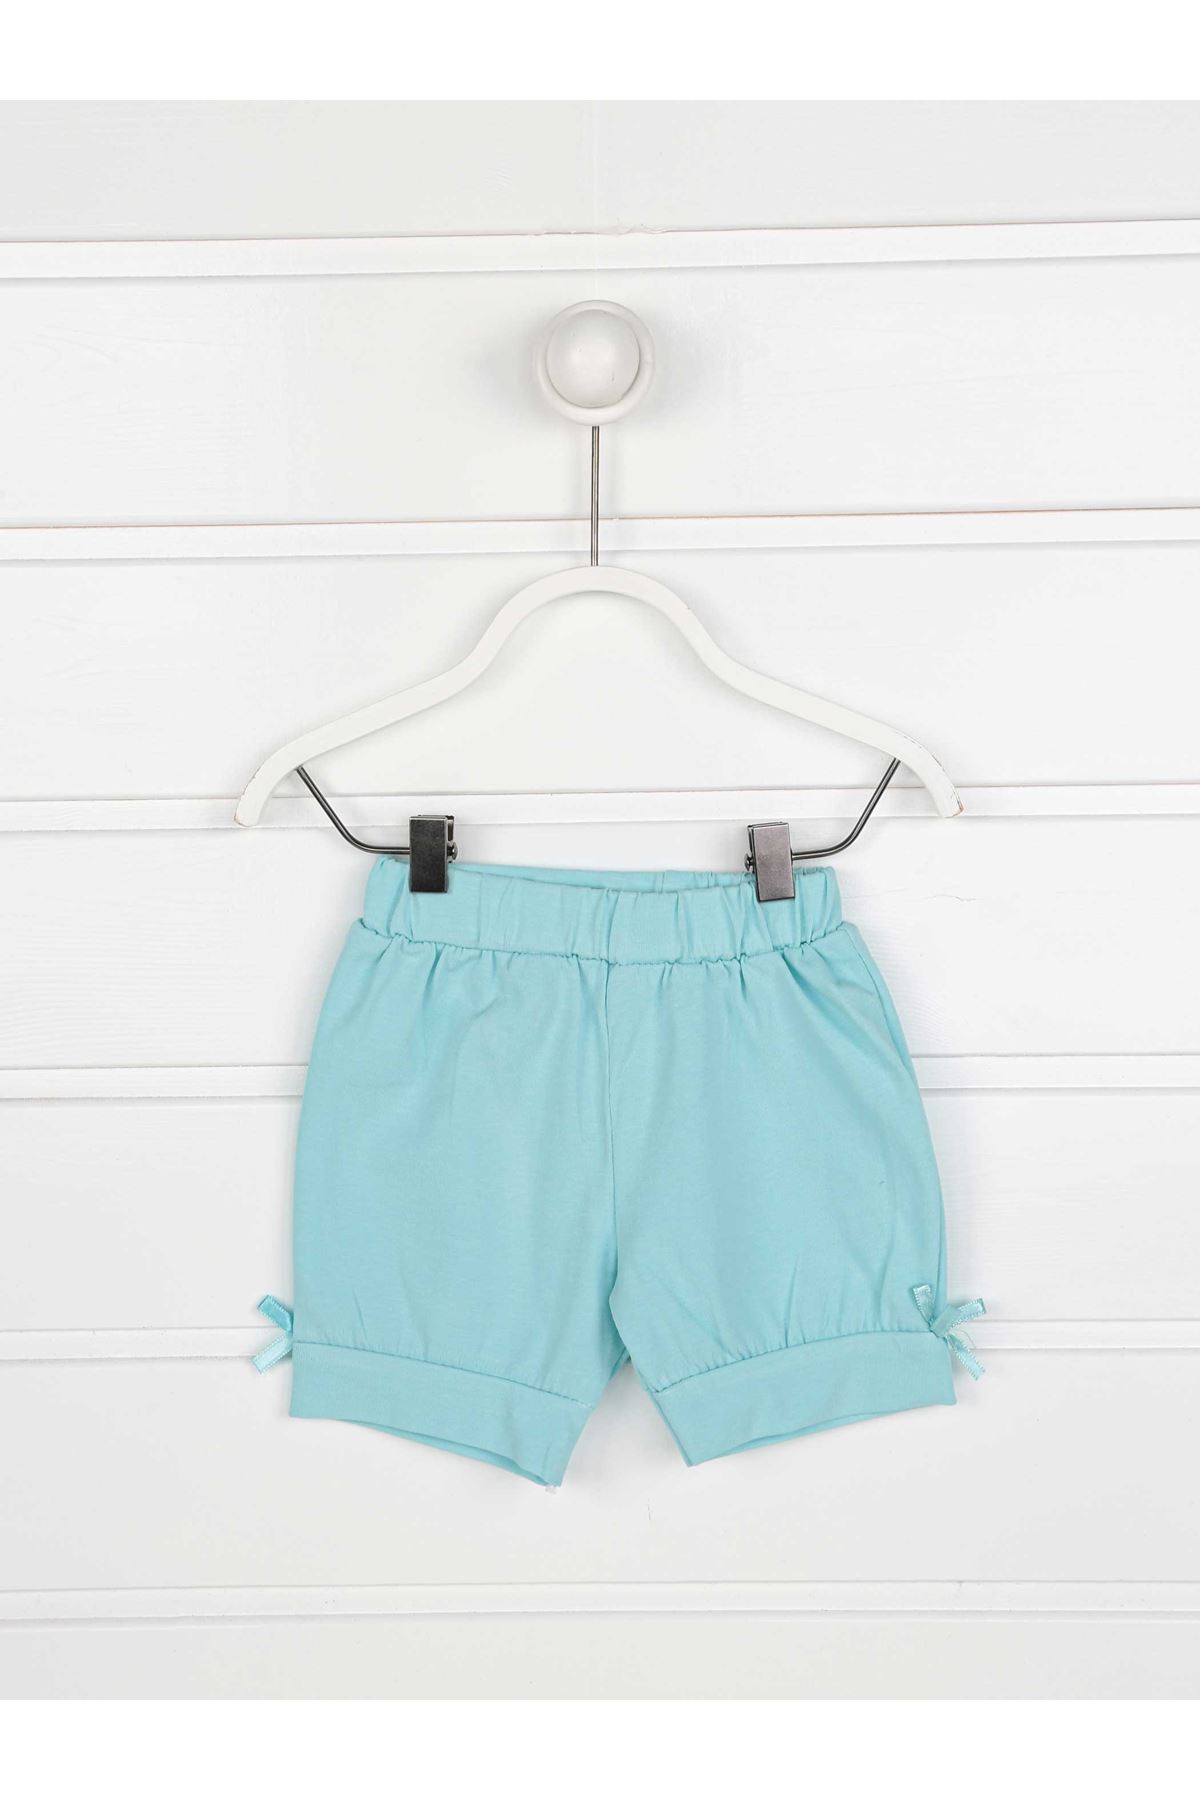 Green Summer baby girl set bottom tights t-shirt 2 pieces bottom top babies cotton seasonal models